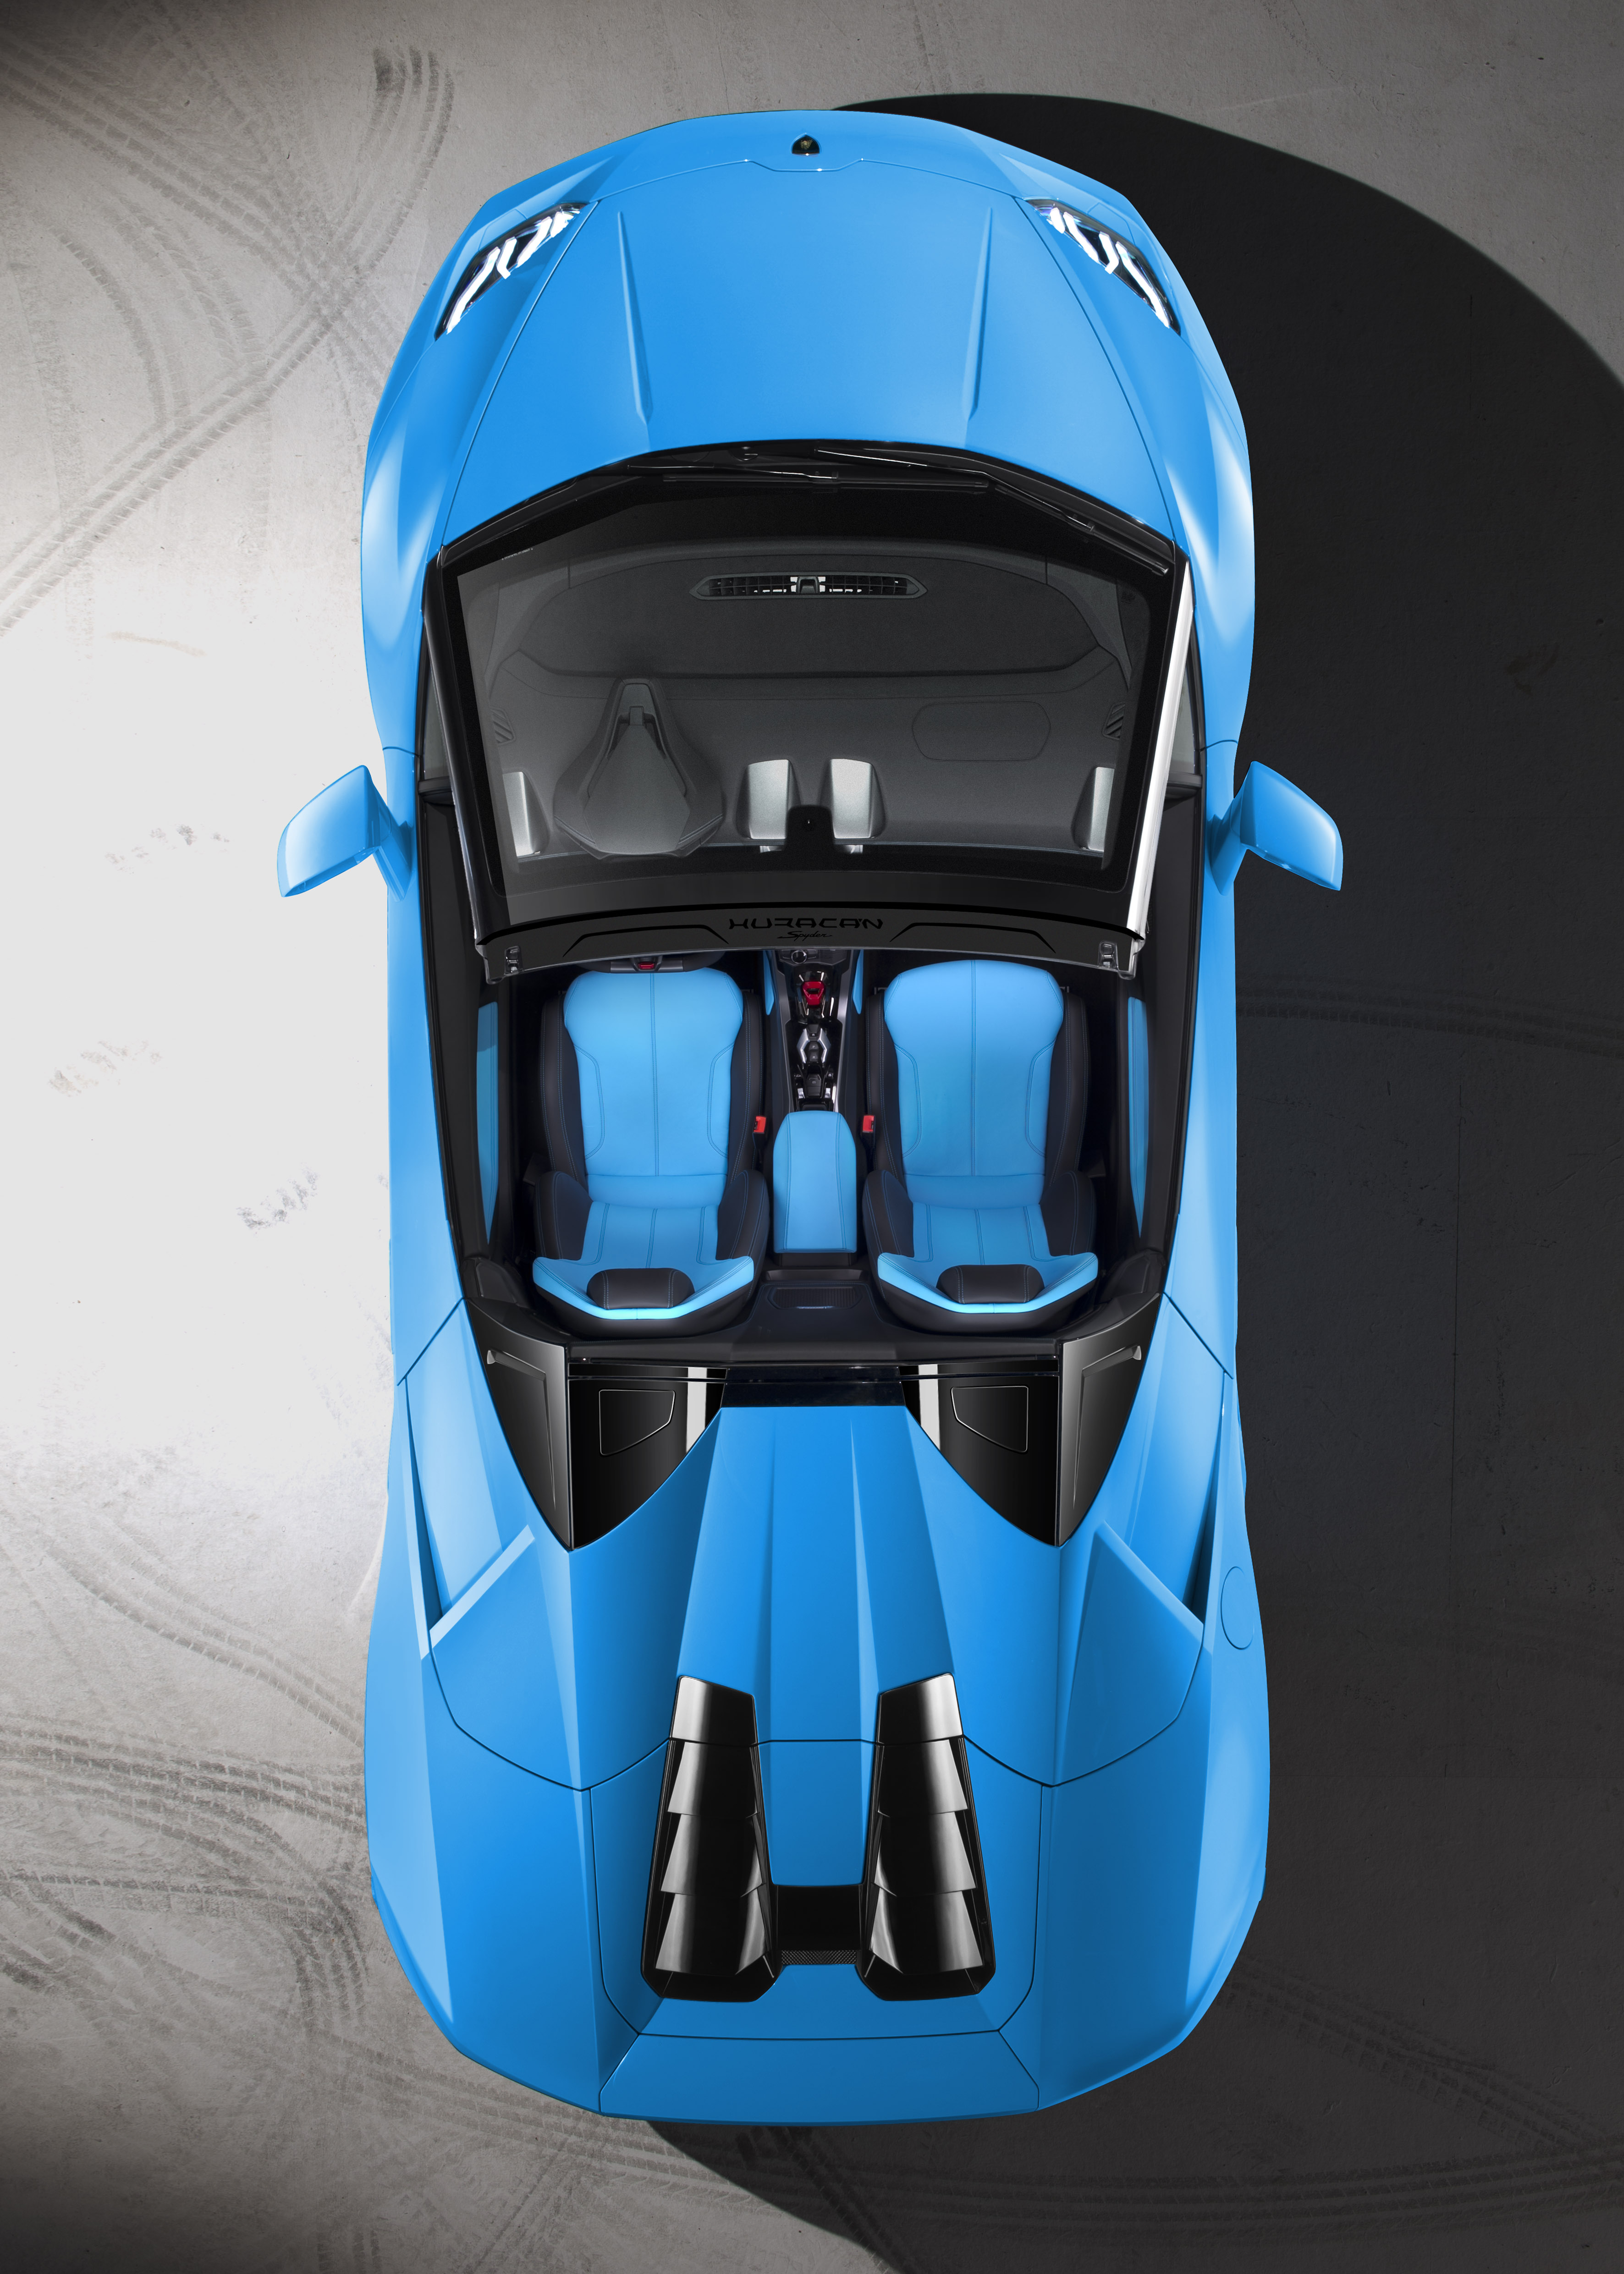 Lamborghini Huracan Spyder overhead view